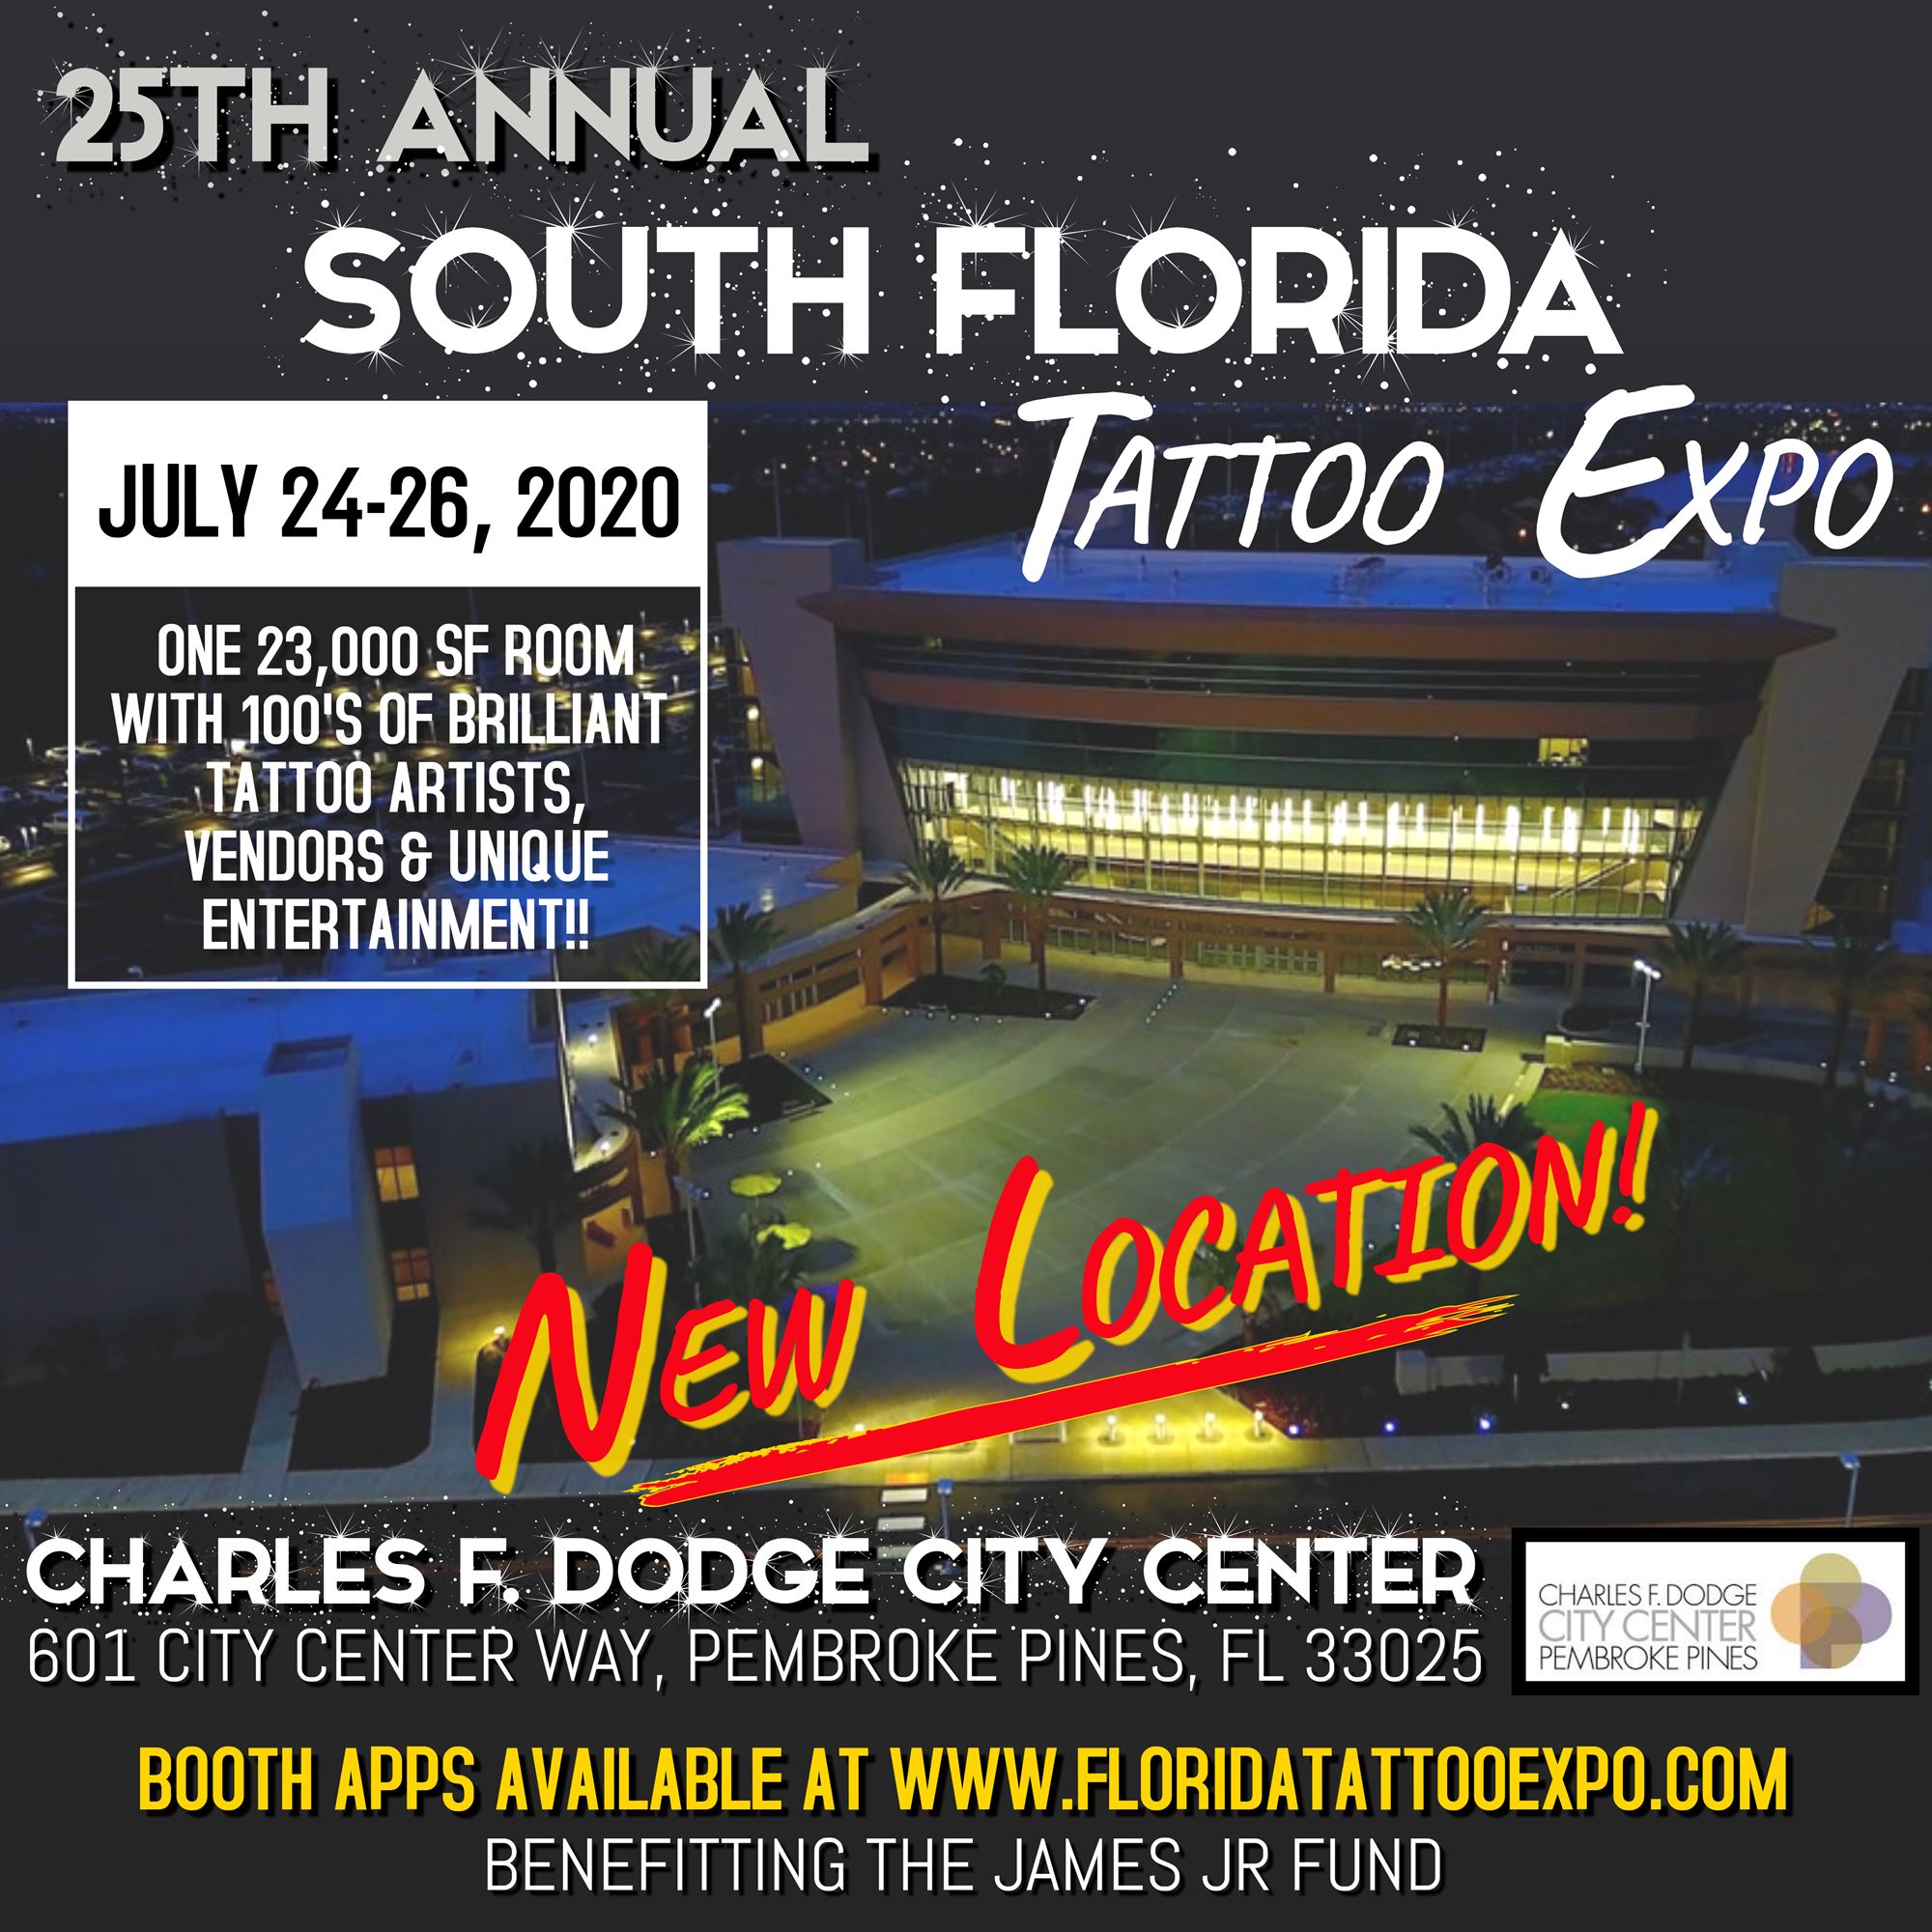 25th Annual South Florida Tattoo Expo